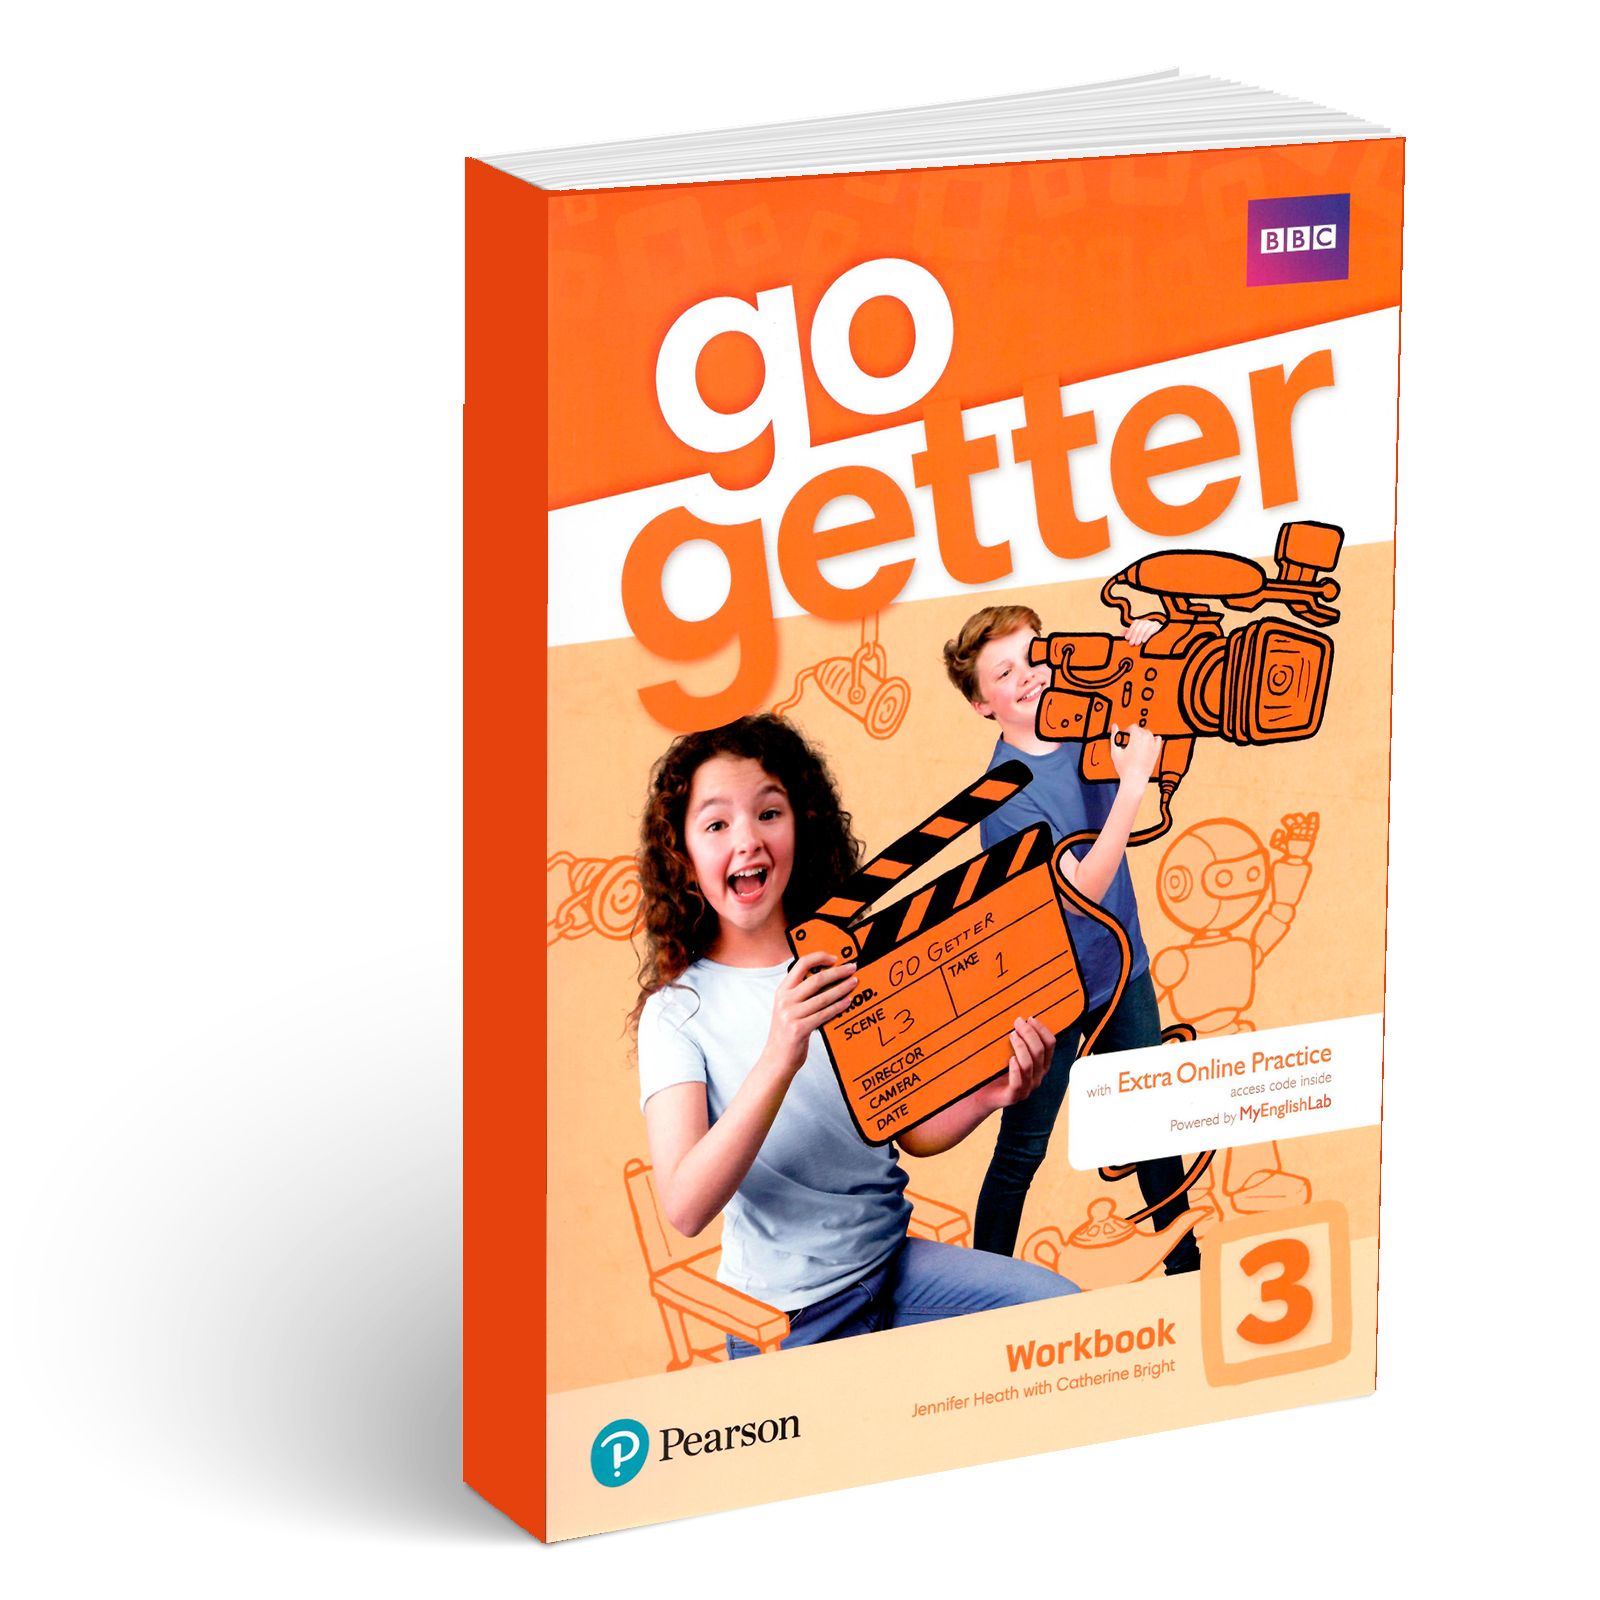 Go getter shopping. Go Getter 3 Workbook. Go Getter учебник. Учебник go Getter 3. Gogetter 3 students book.